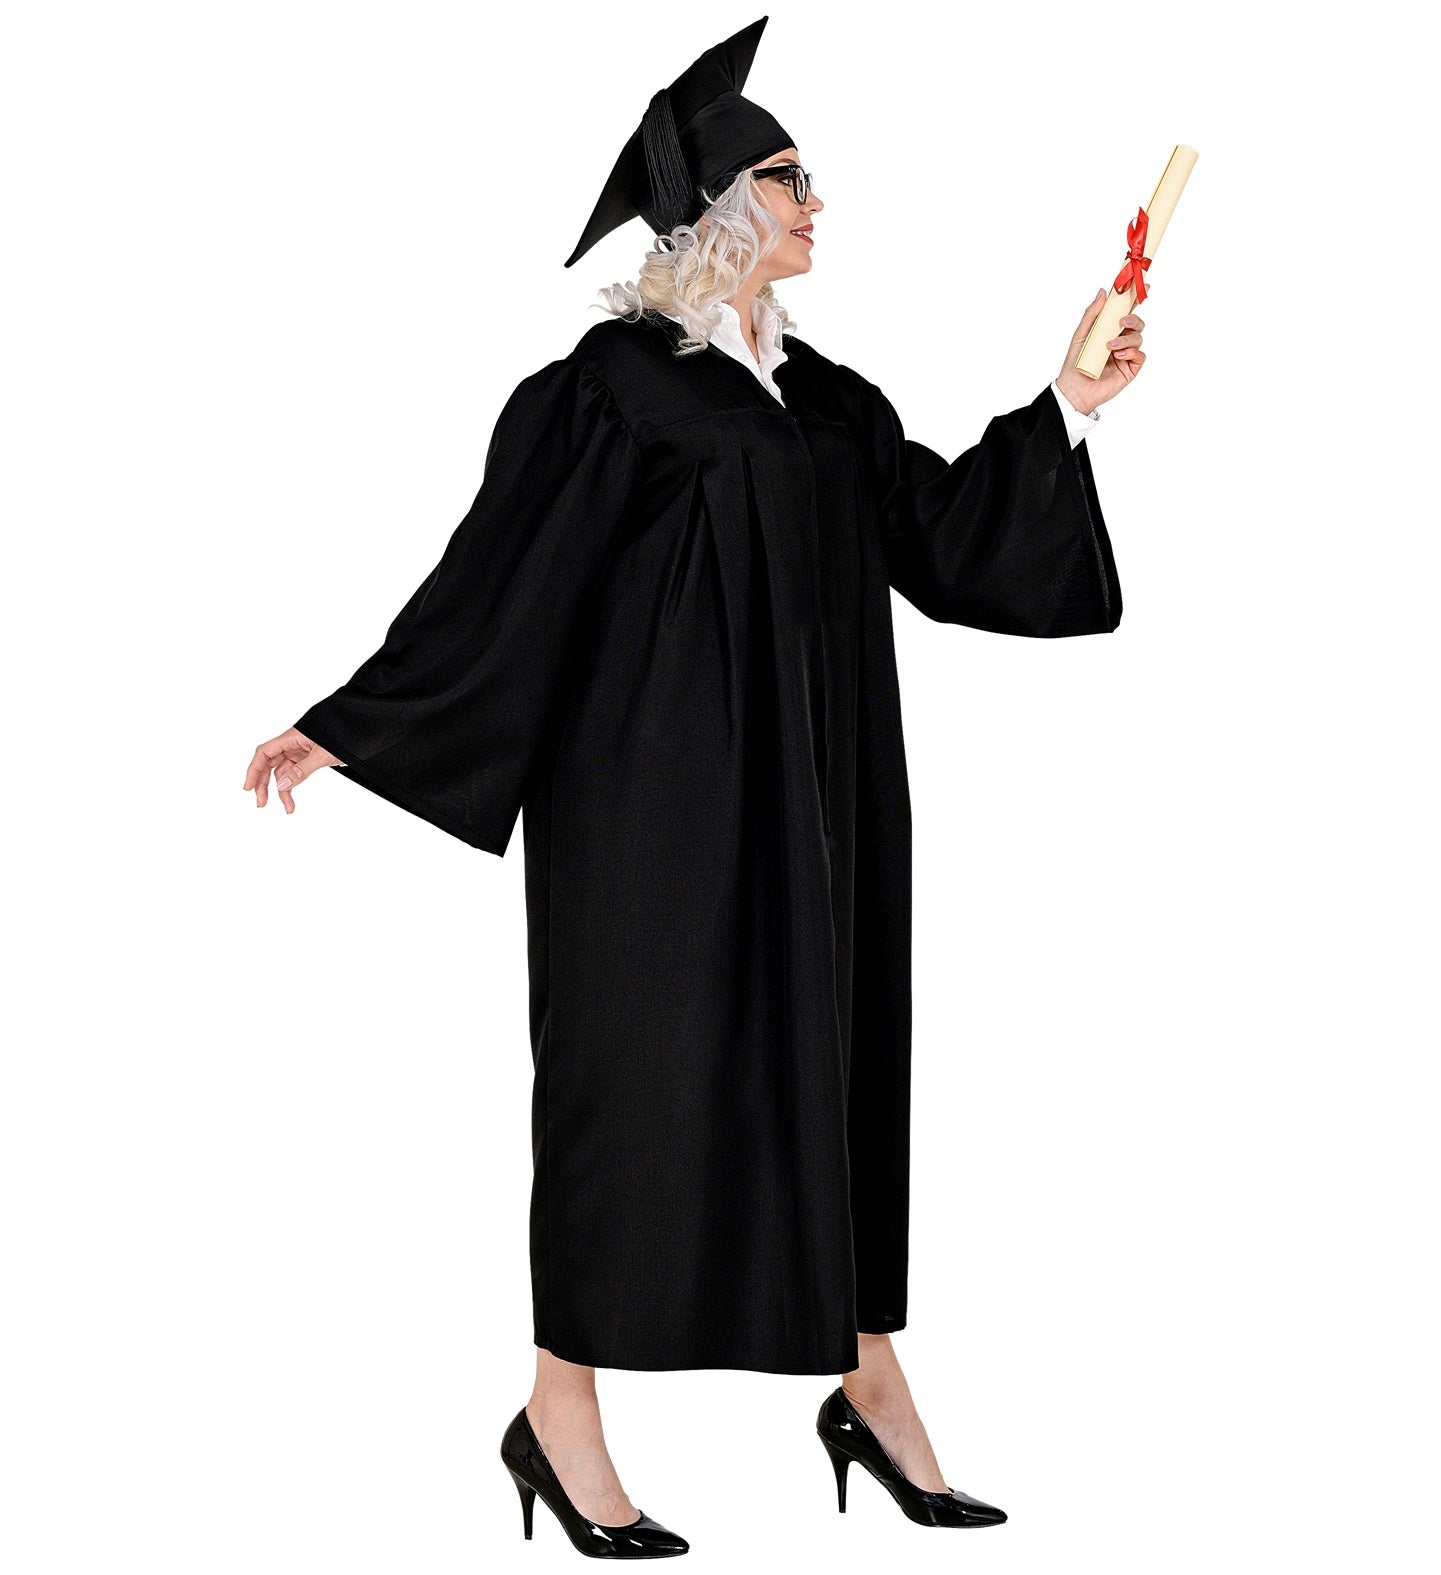 School Graduation outfit